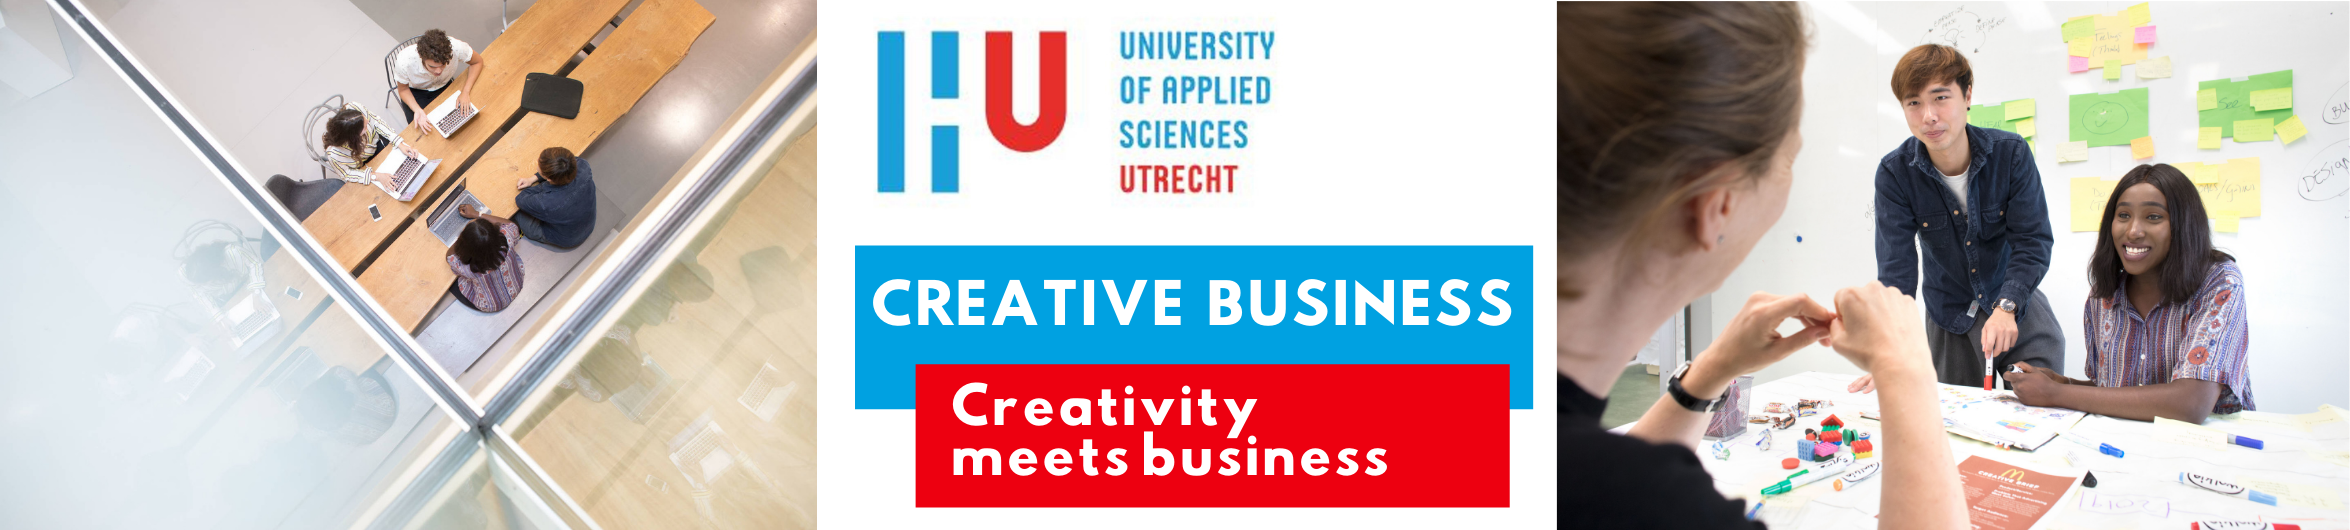 Creative Business HU